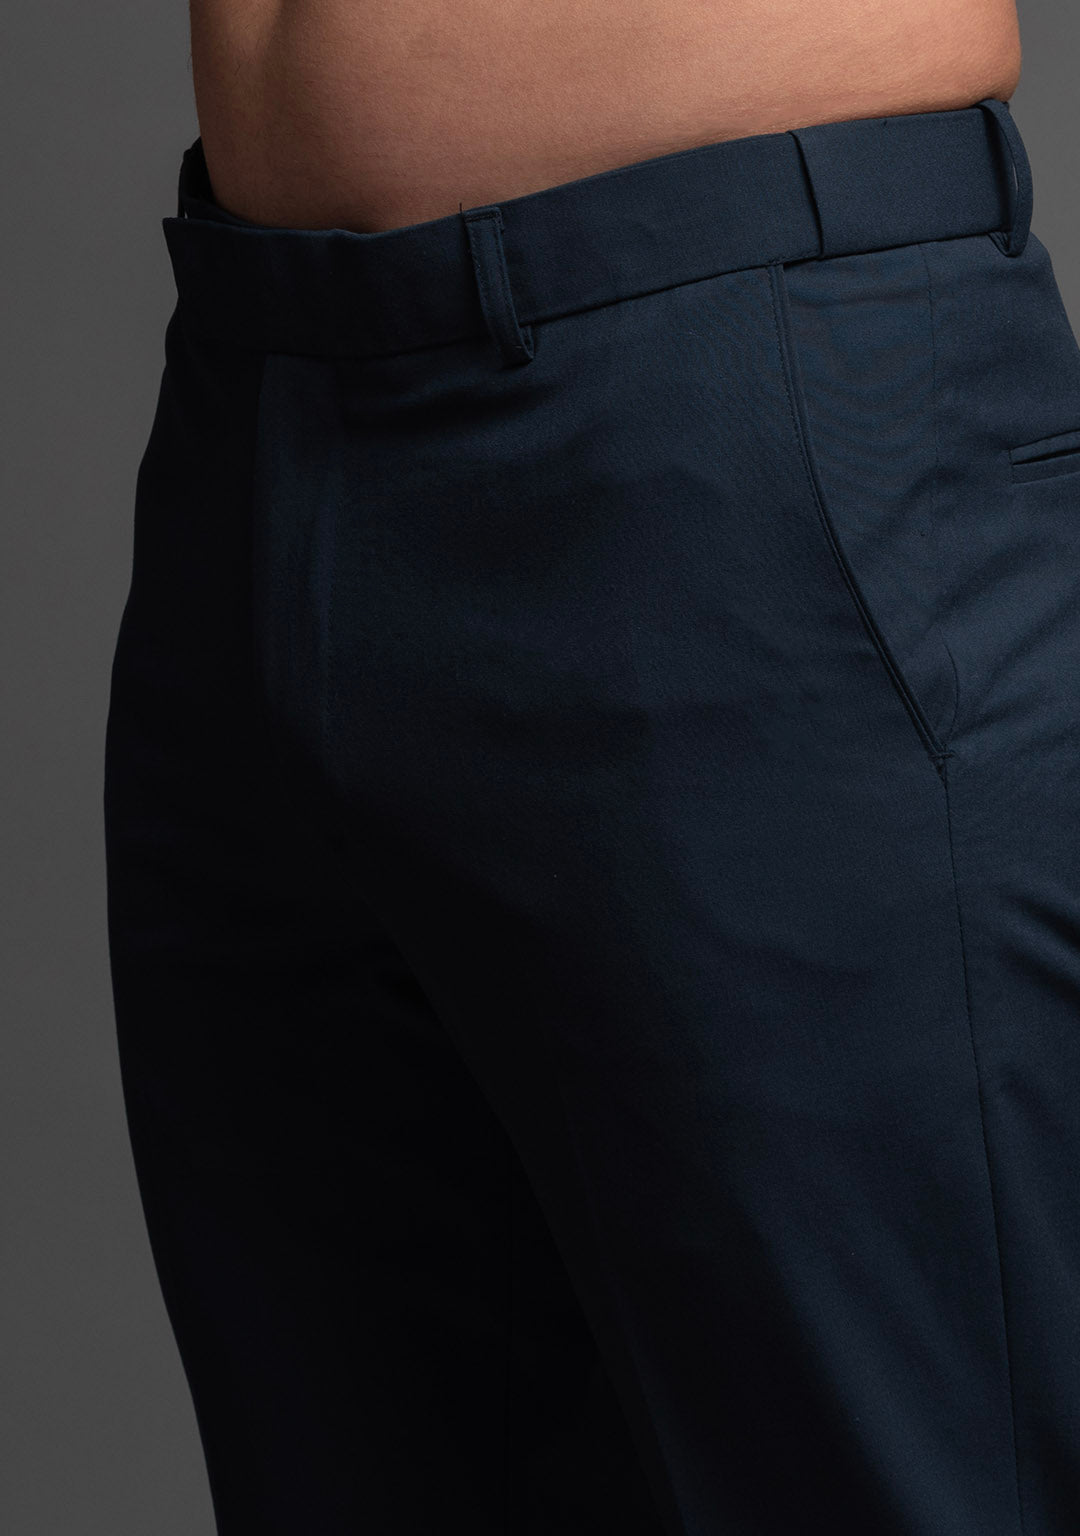 Oxford Blue Colour Trousers for Men - Everywear Pants by Aristobrat